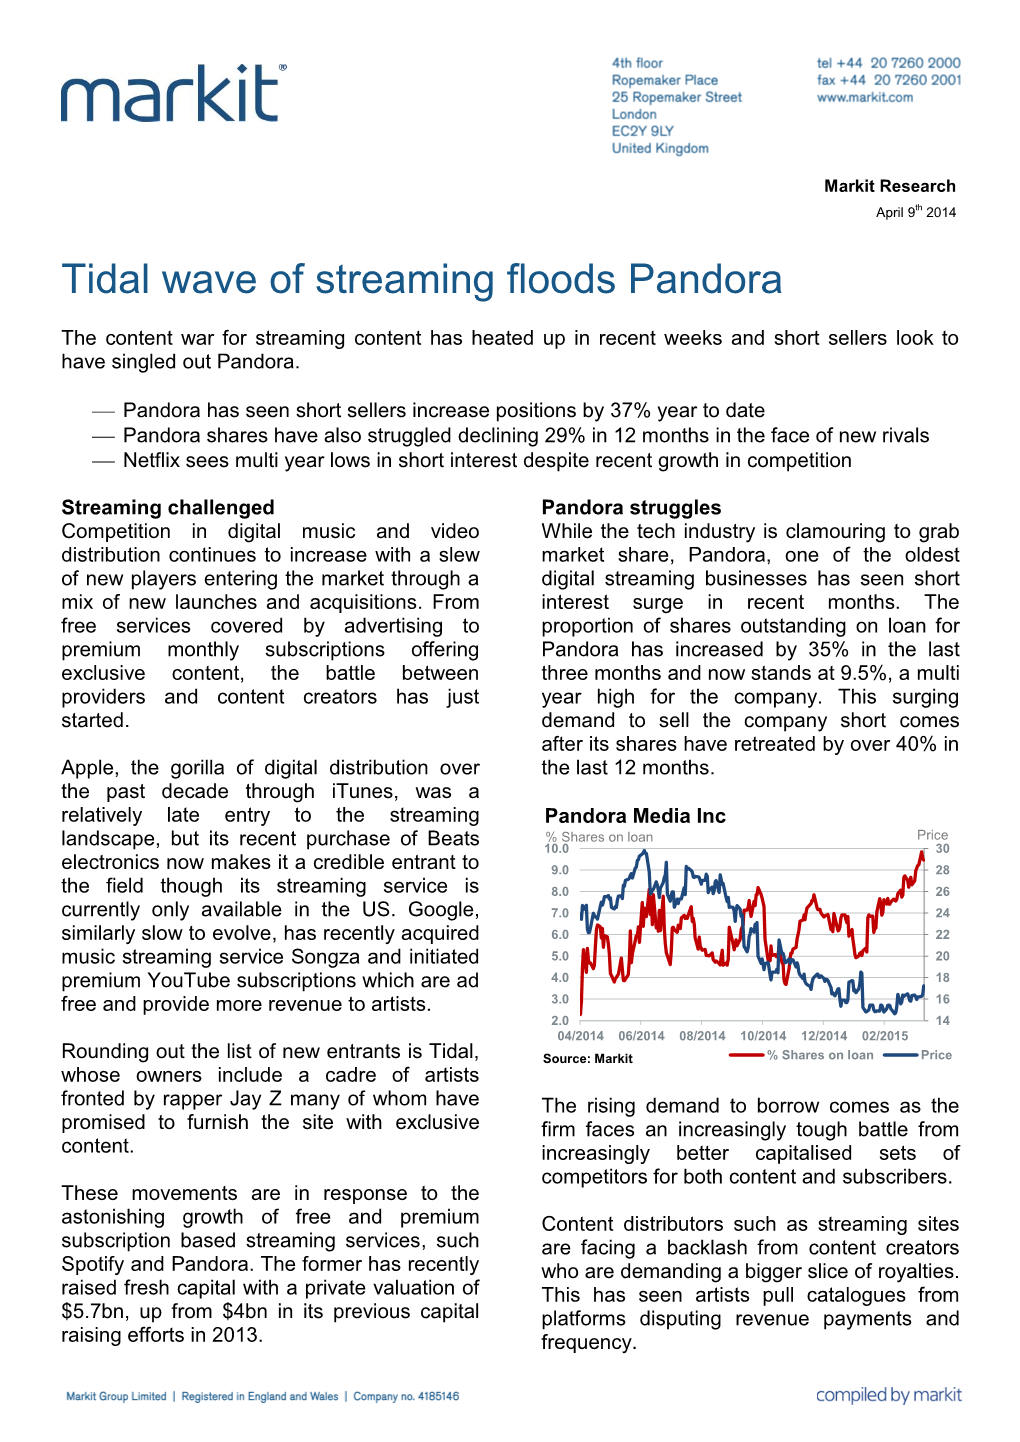 Tidal Wave of Streaming Floods Pandora